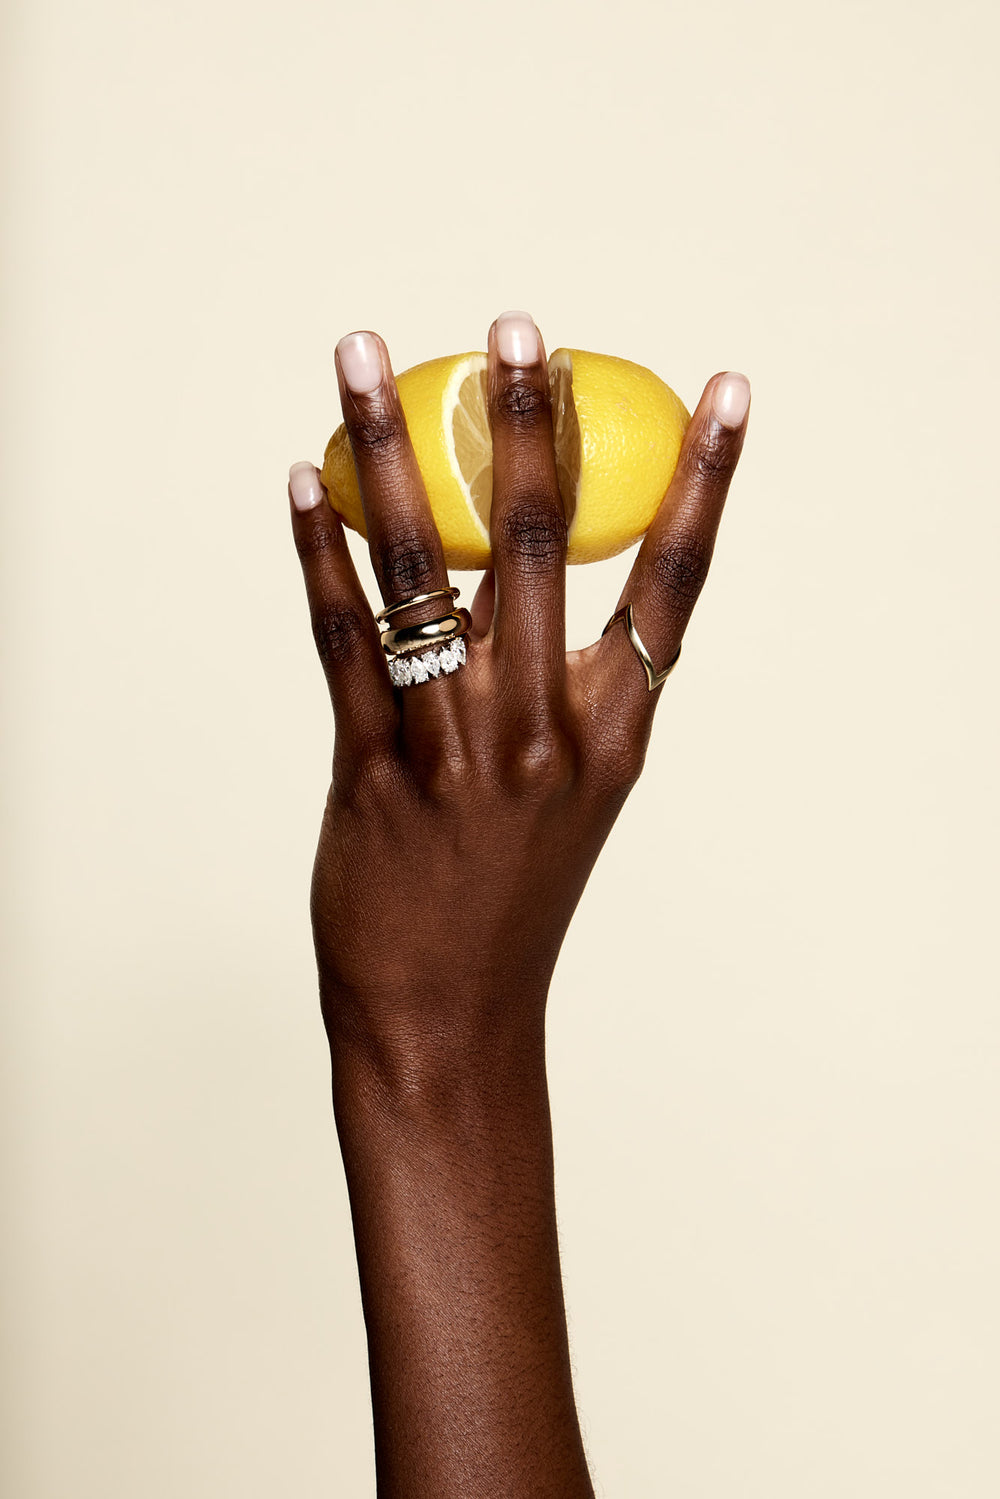 Verona Ring | 18K White Gold| Natasha Schweitzer